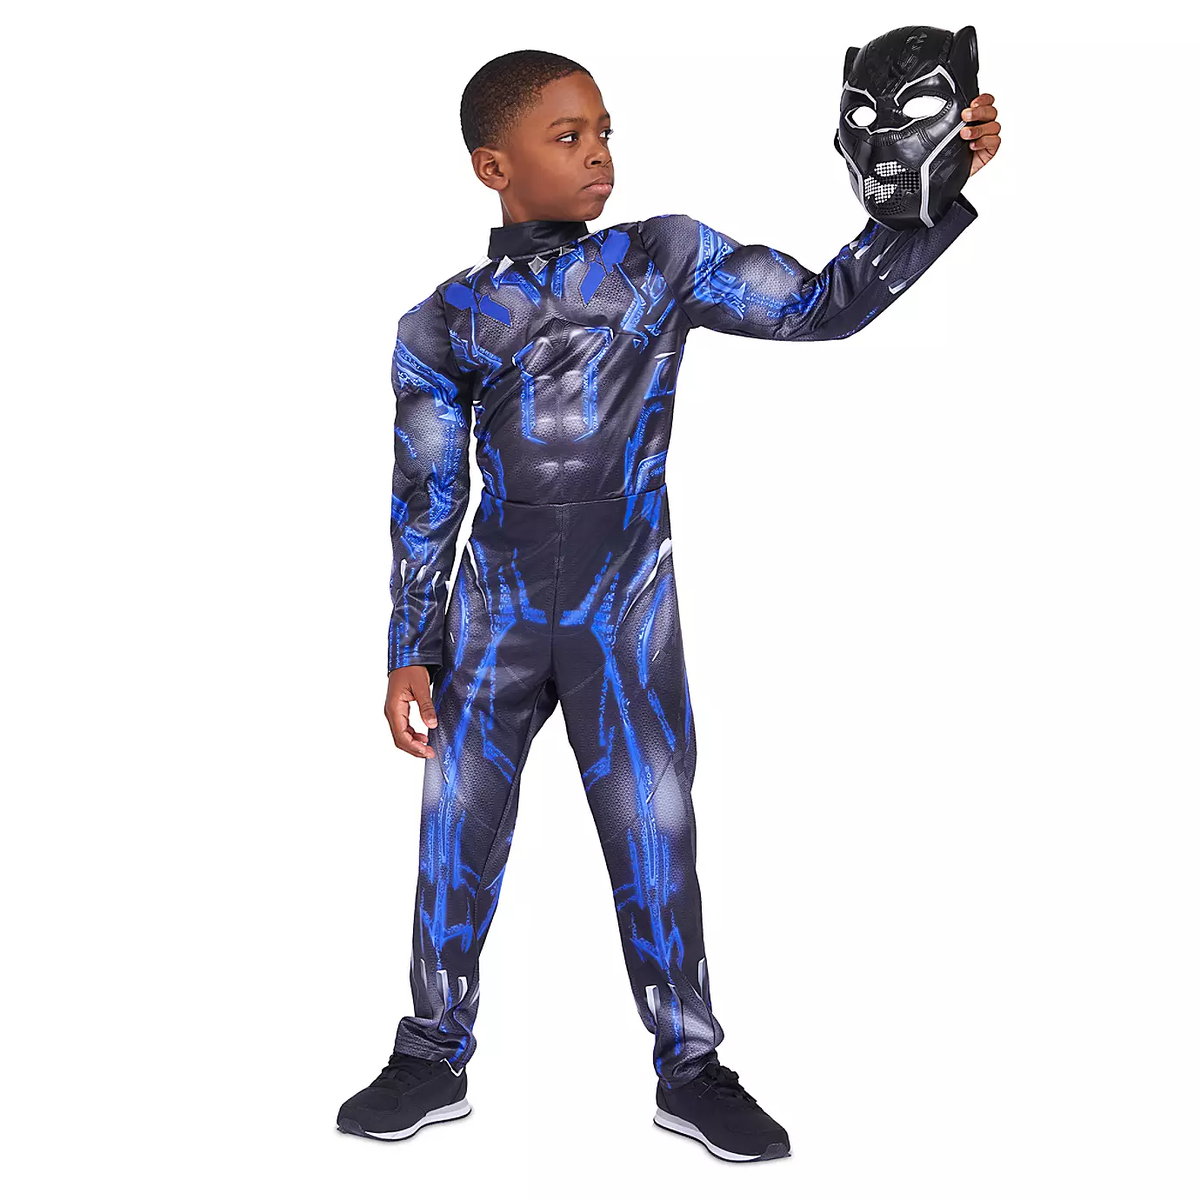 Black Panther Light Up Costume for Kids